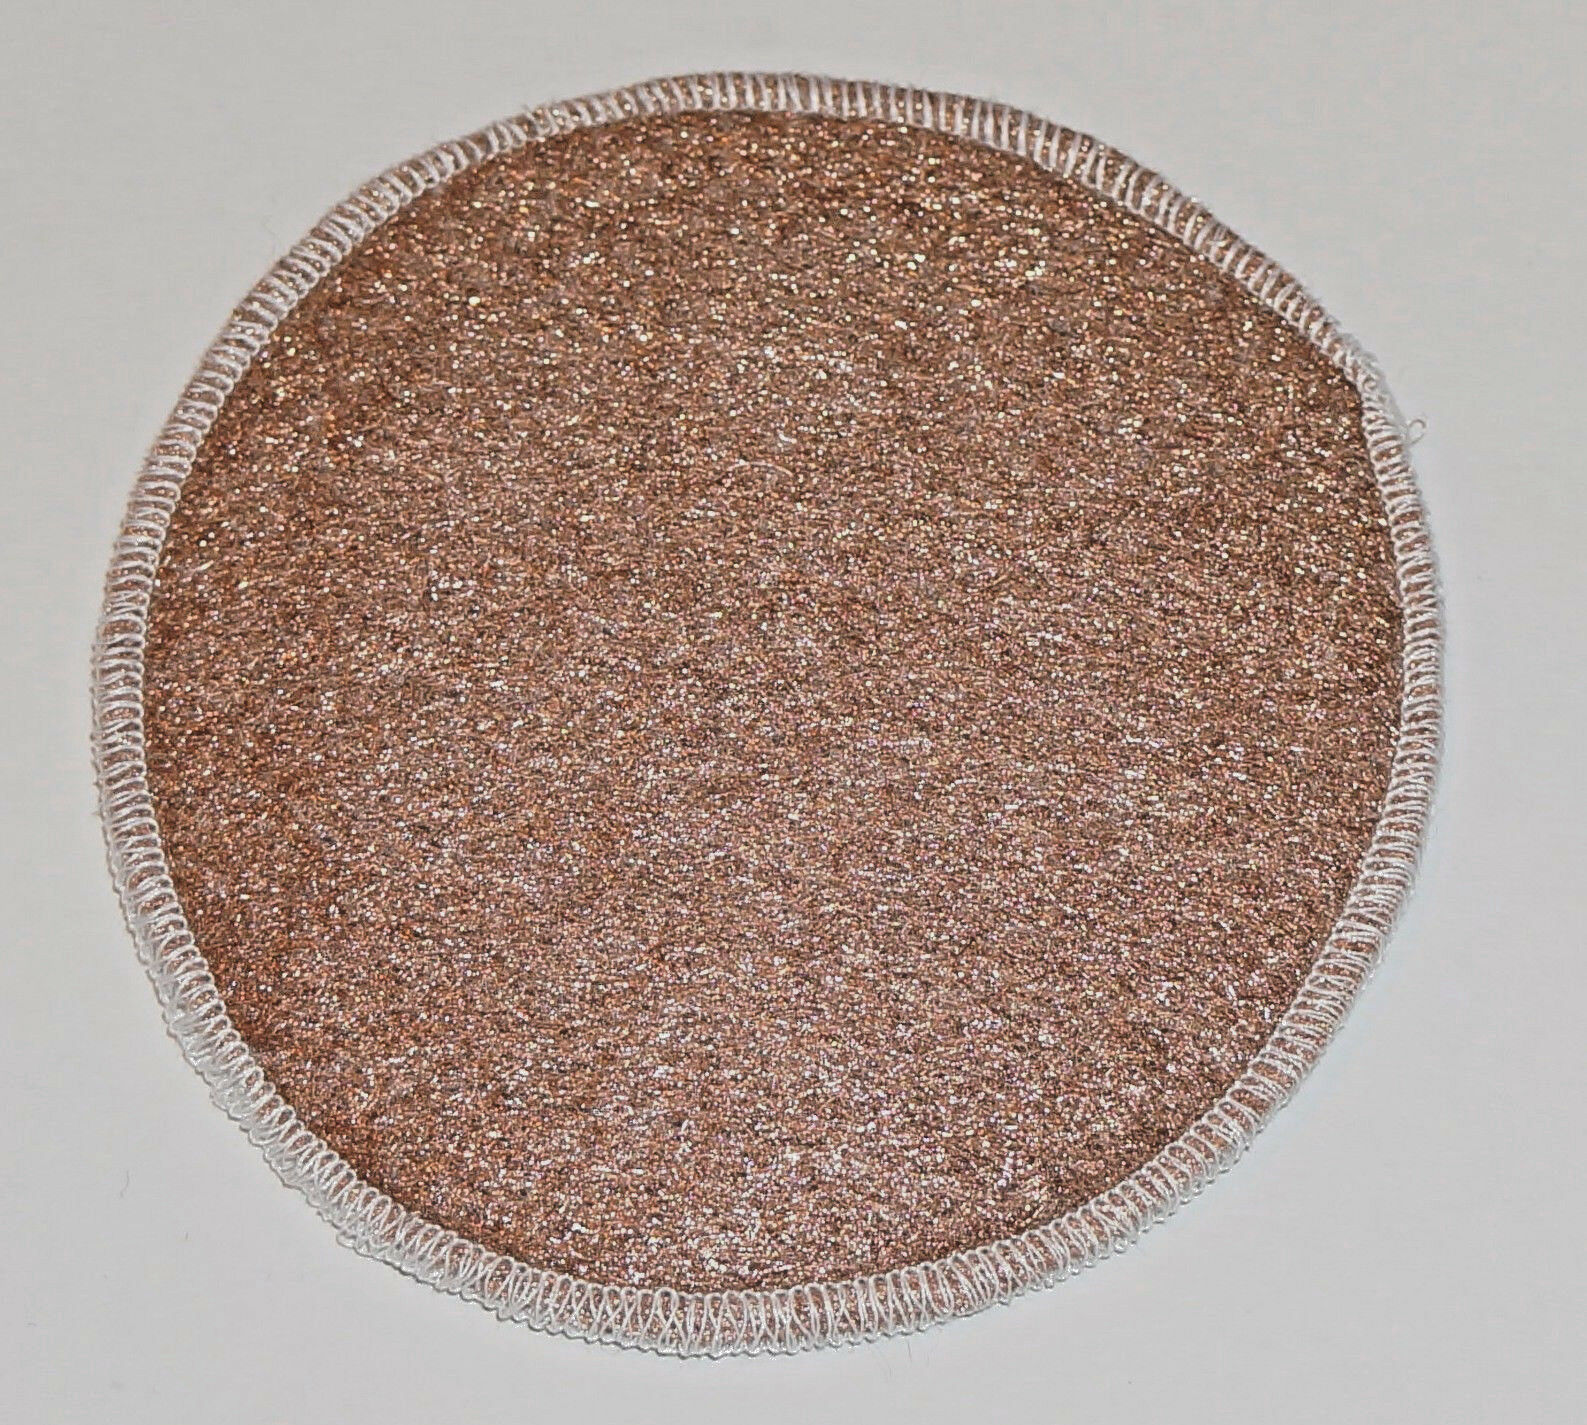 Lustersheen 5" Diameter Bronze Wool Polishing Pad ` Great Shower Tile Cleaner!!